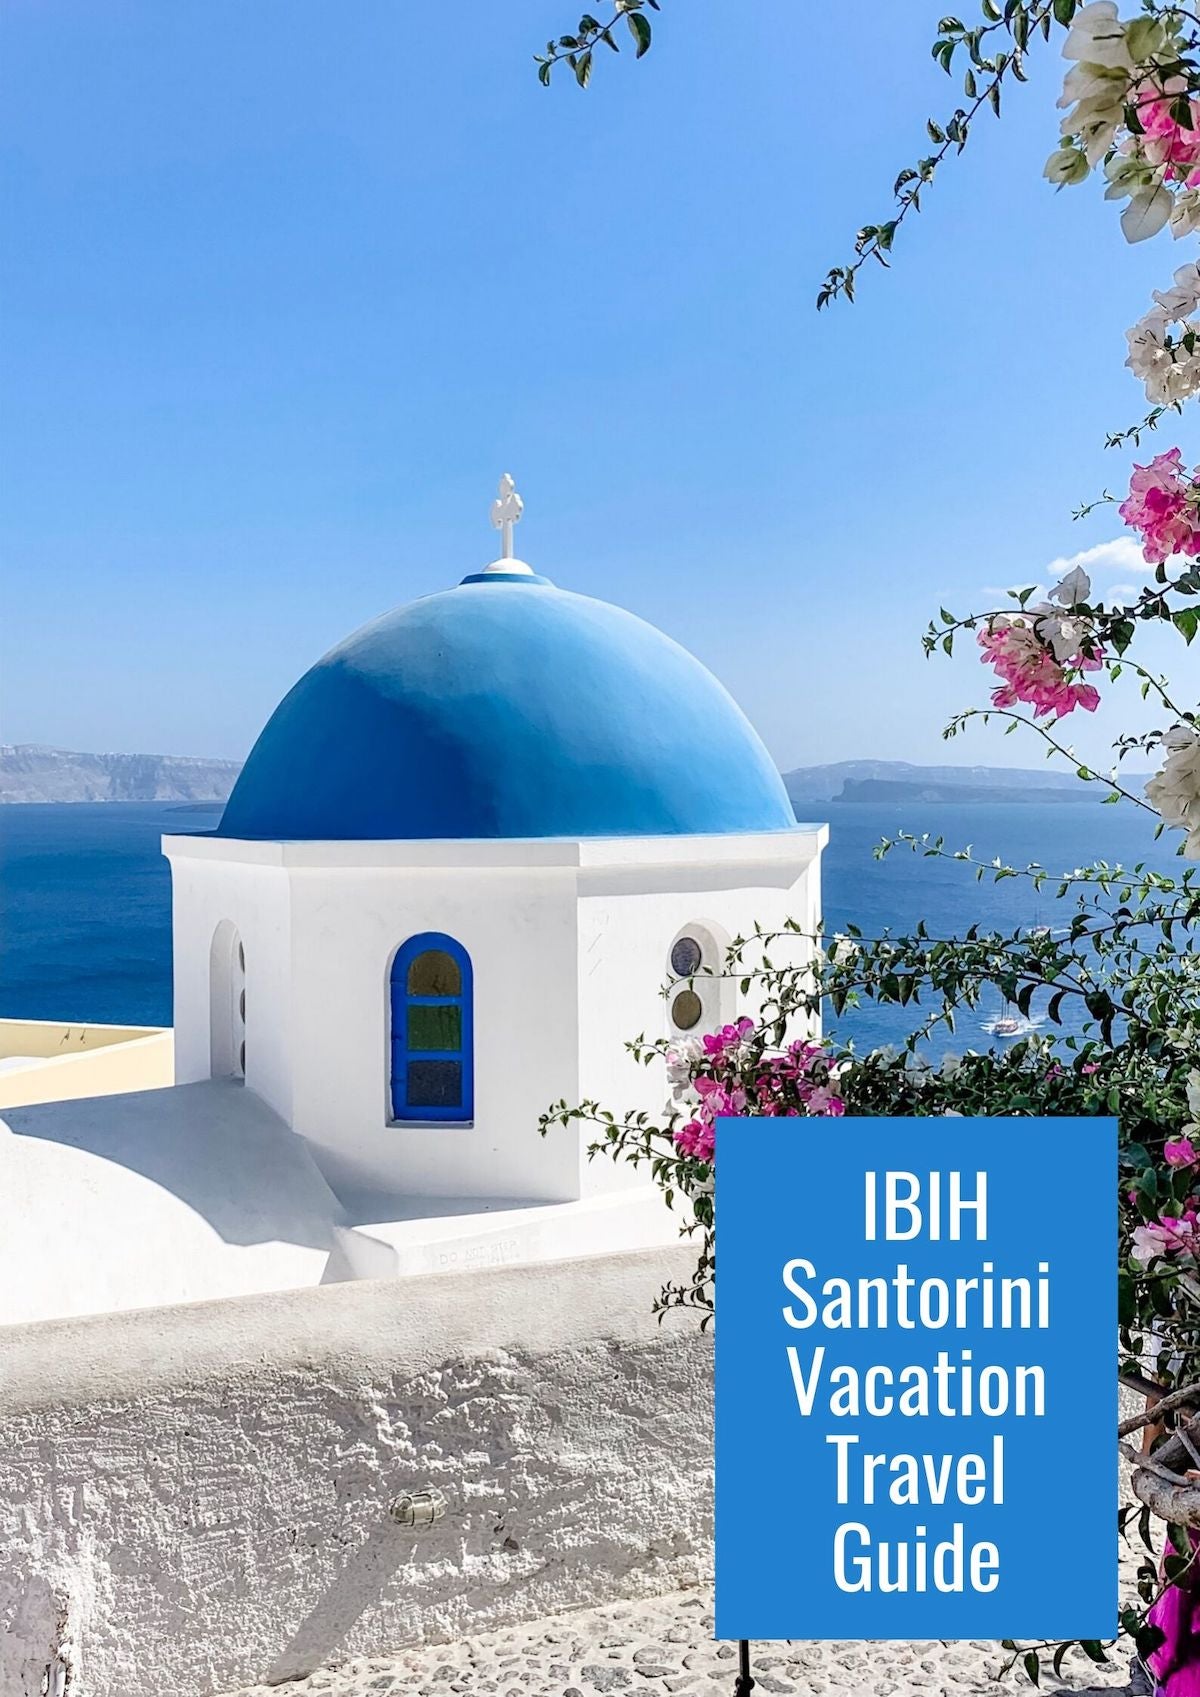 IBIH Santorini Vacation Travel Guide